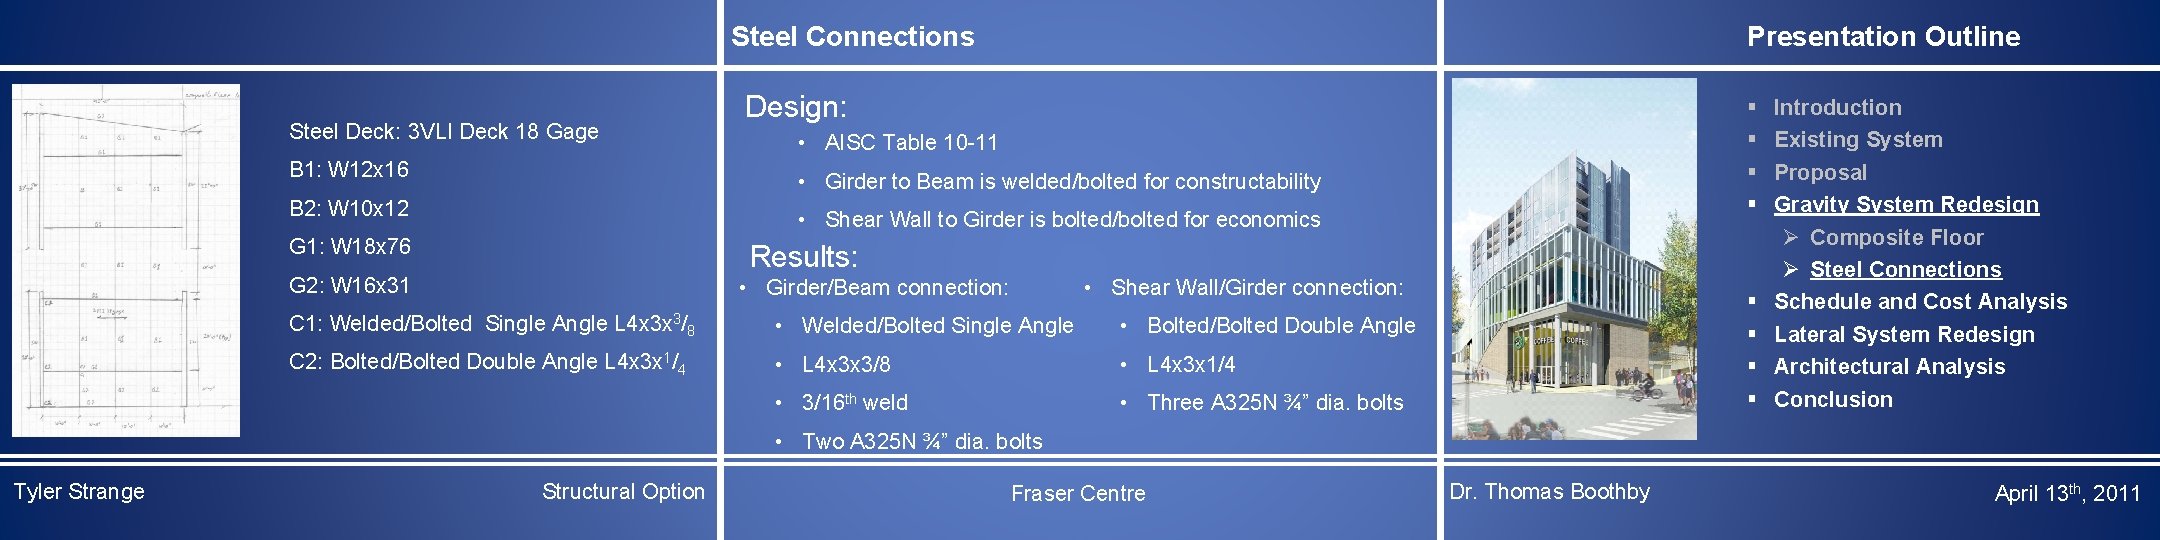 Presentation Outline Steel Connections Steel Deck: 3 VLI Deck 18 Gage Design: • AISC